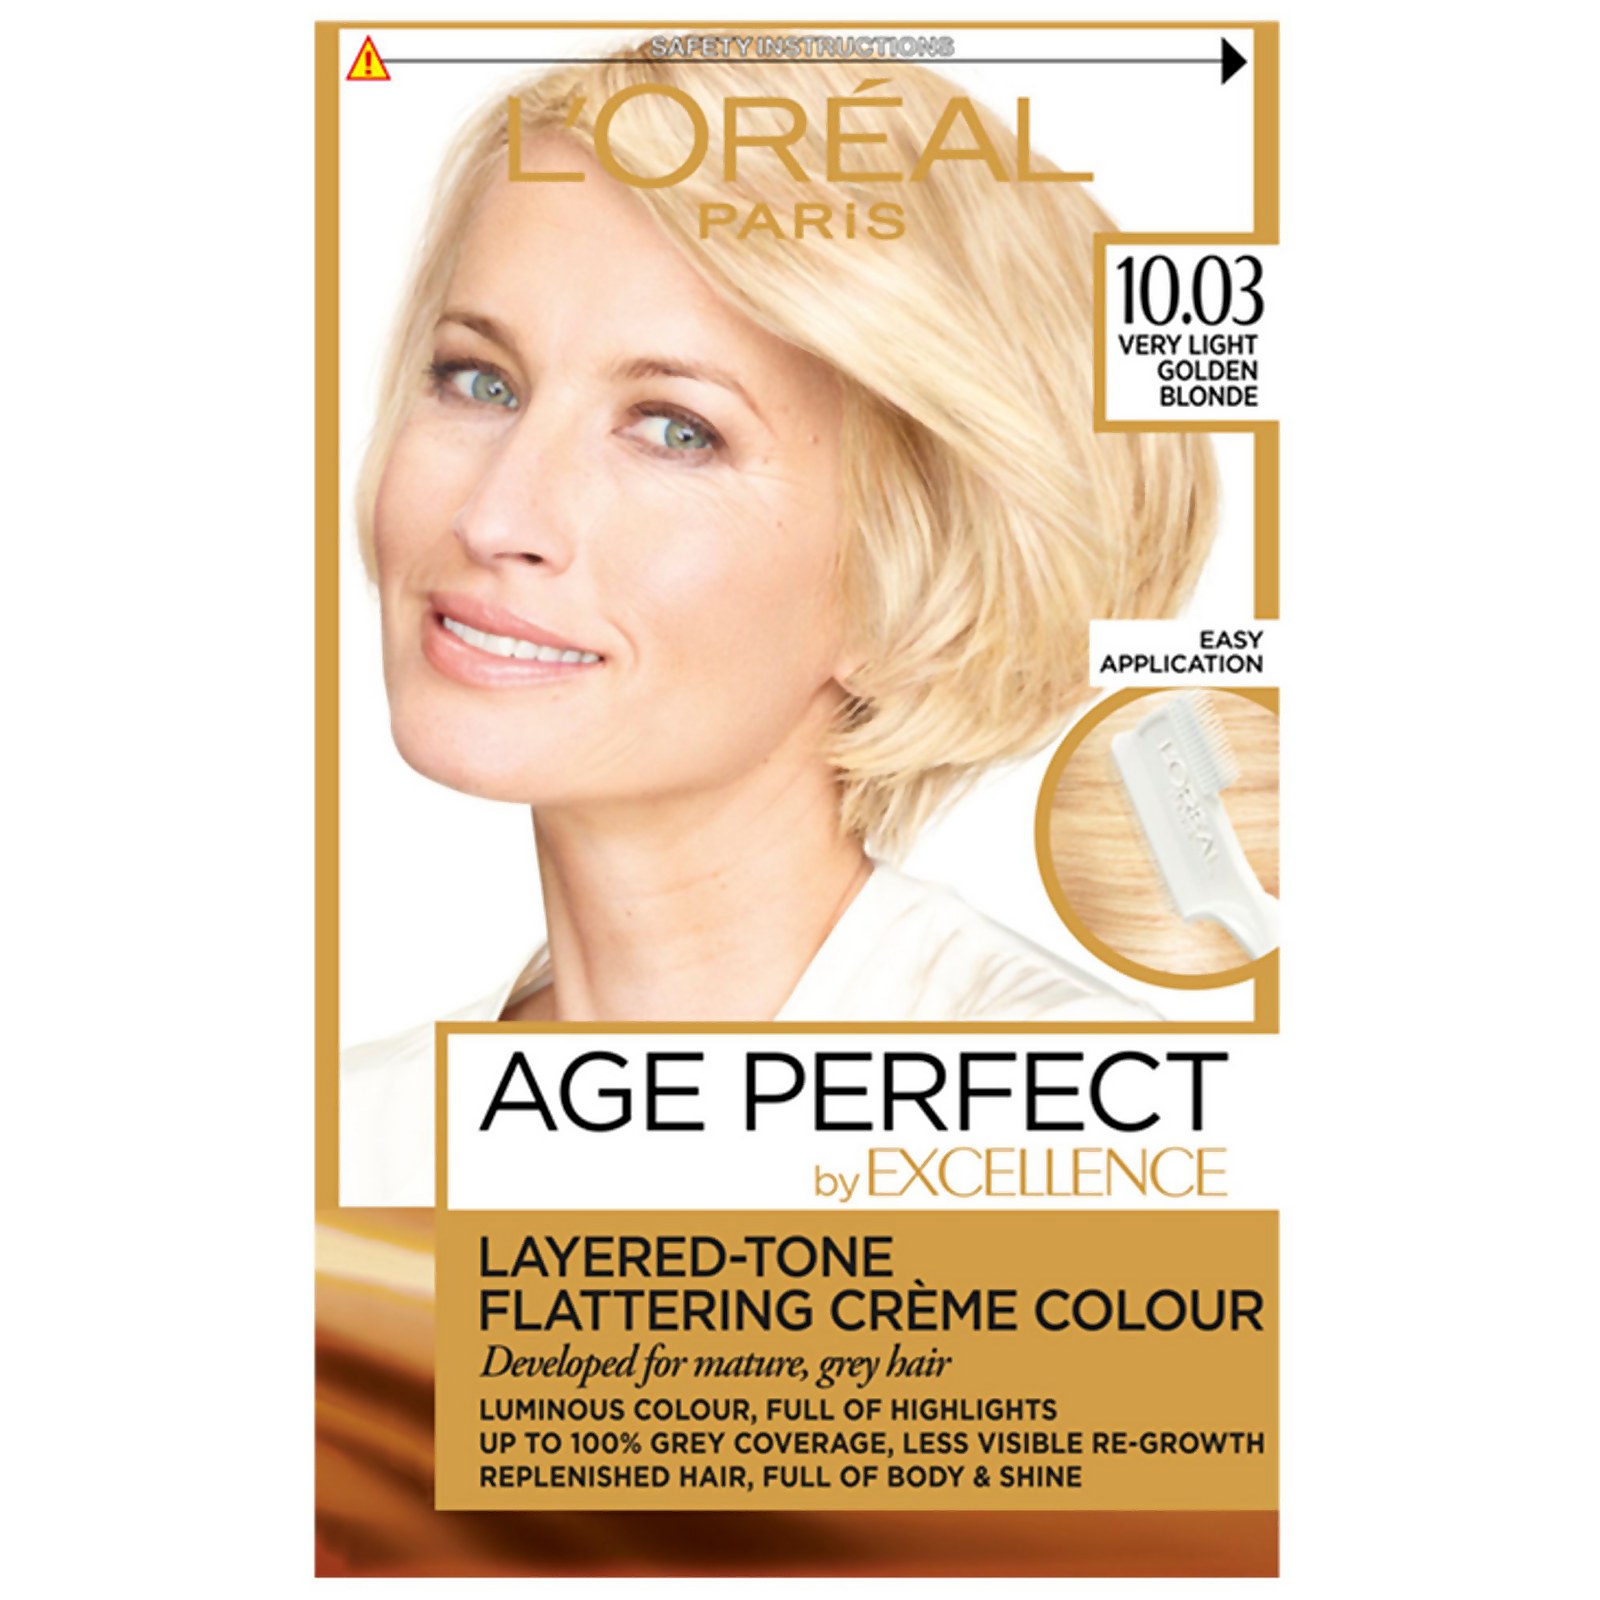 L'Oréal Paris Age Perfect Hair Dye (Various Shades) - 10.03 Very Light Golden Blonde